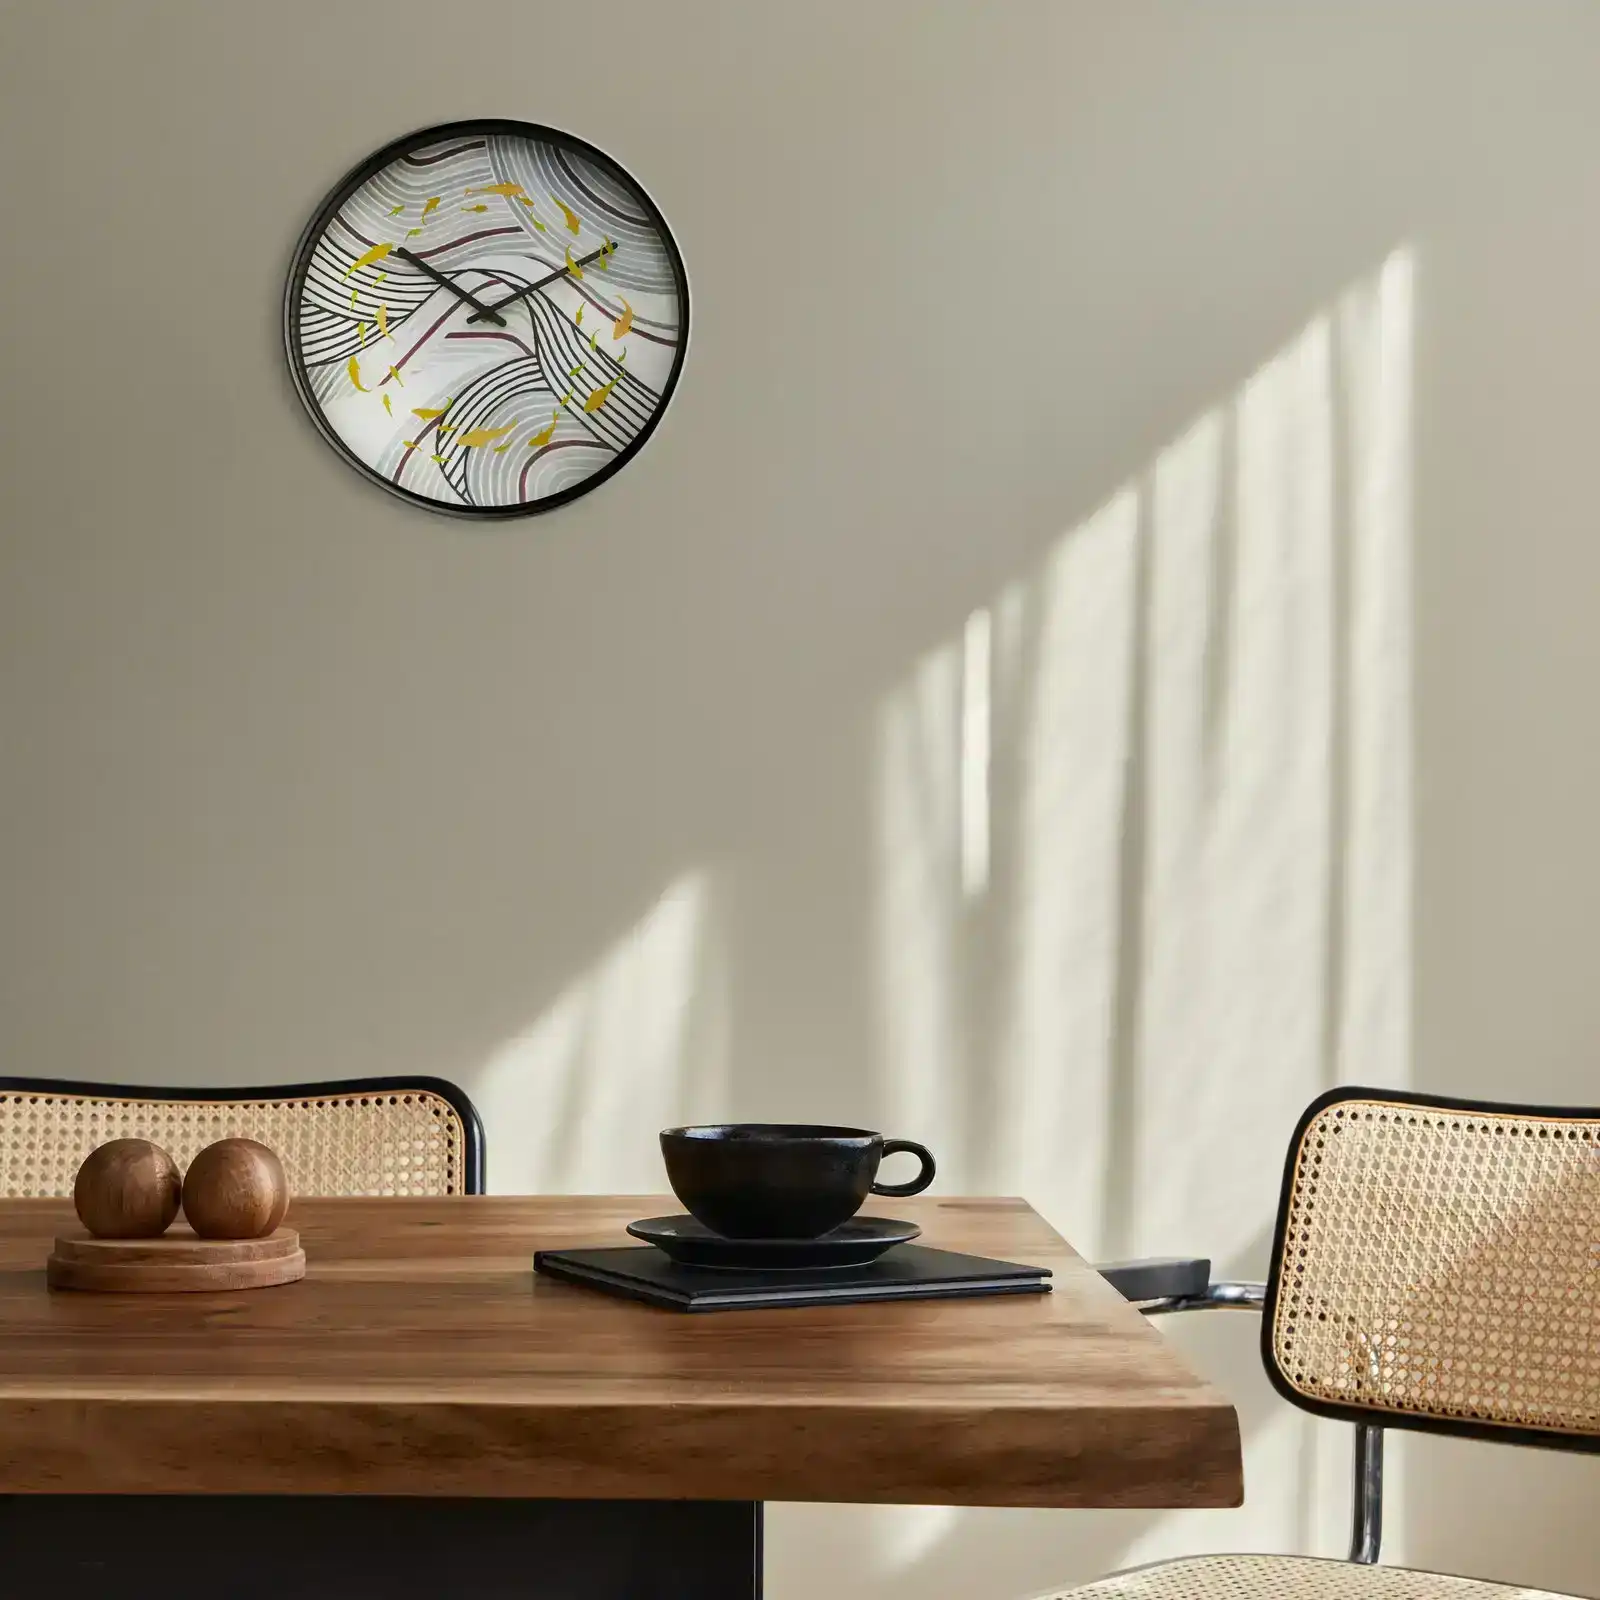 NeXtime Koi Plastic Analogue 30cm Hanging Wall Clock Decor Silent Sweep Grey